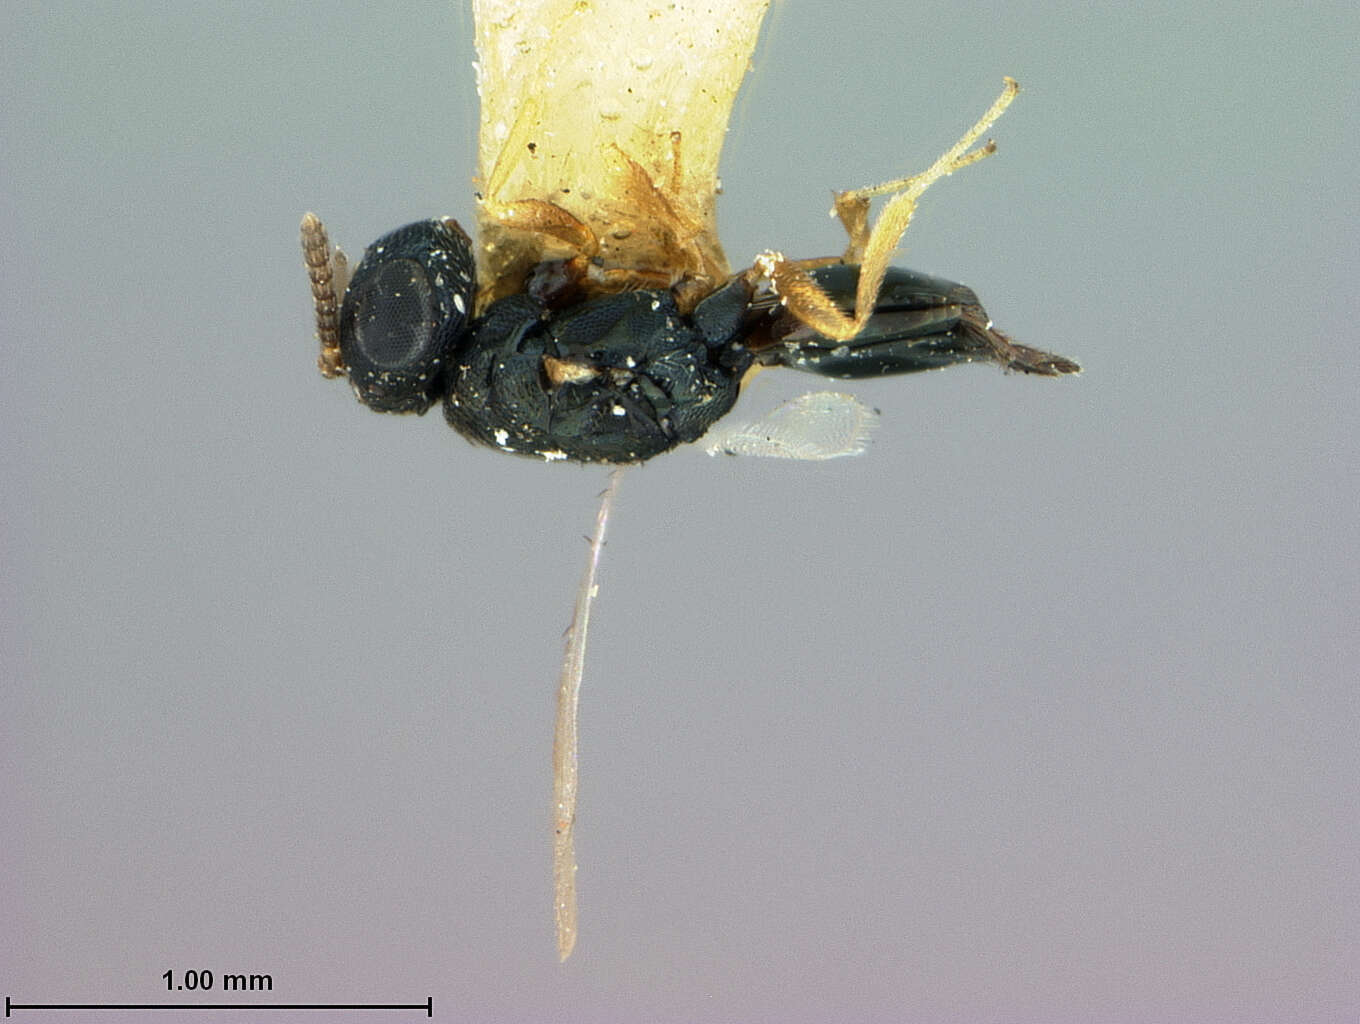 Image of Parasitoid wasp